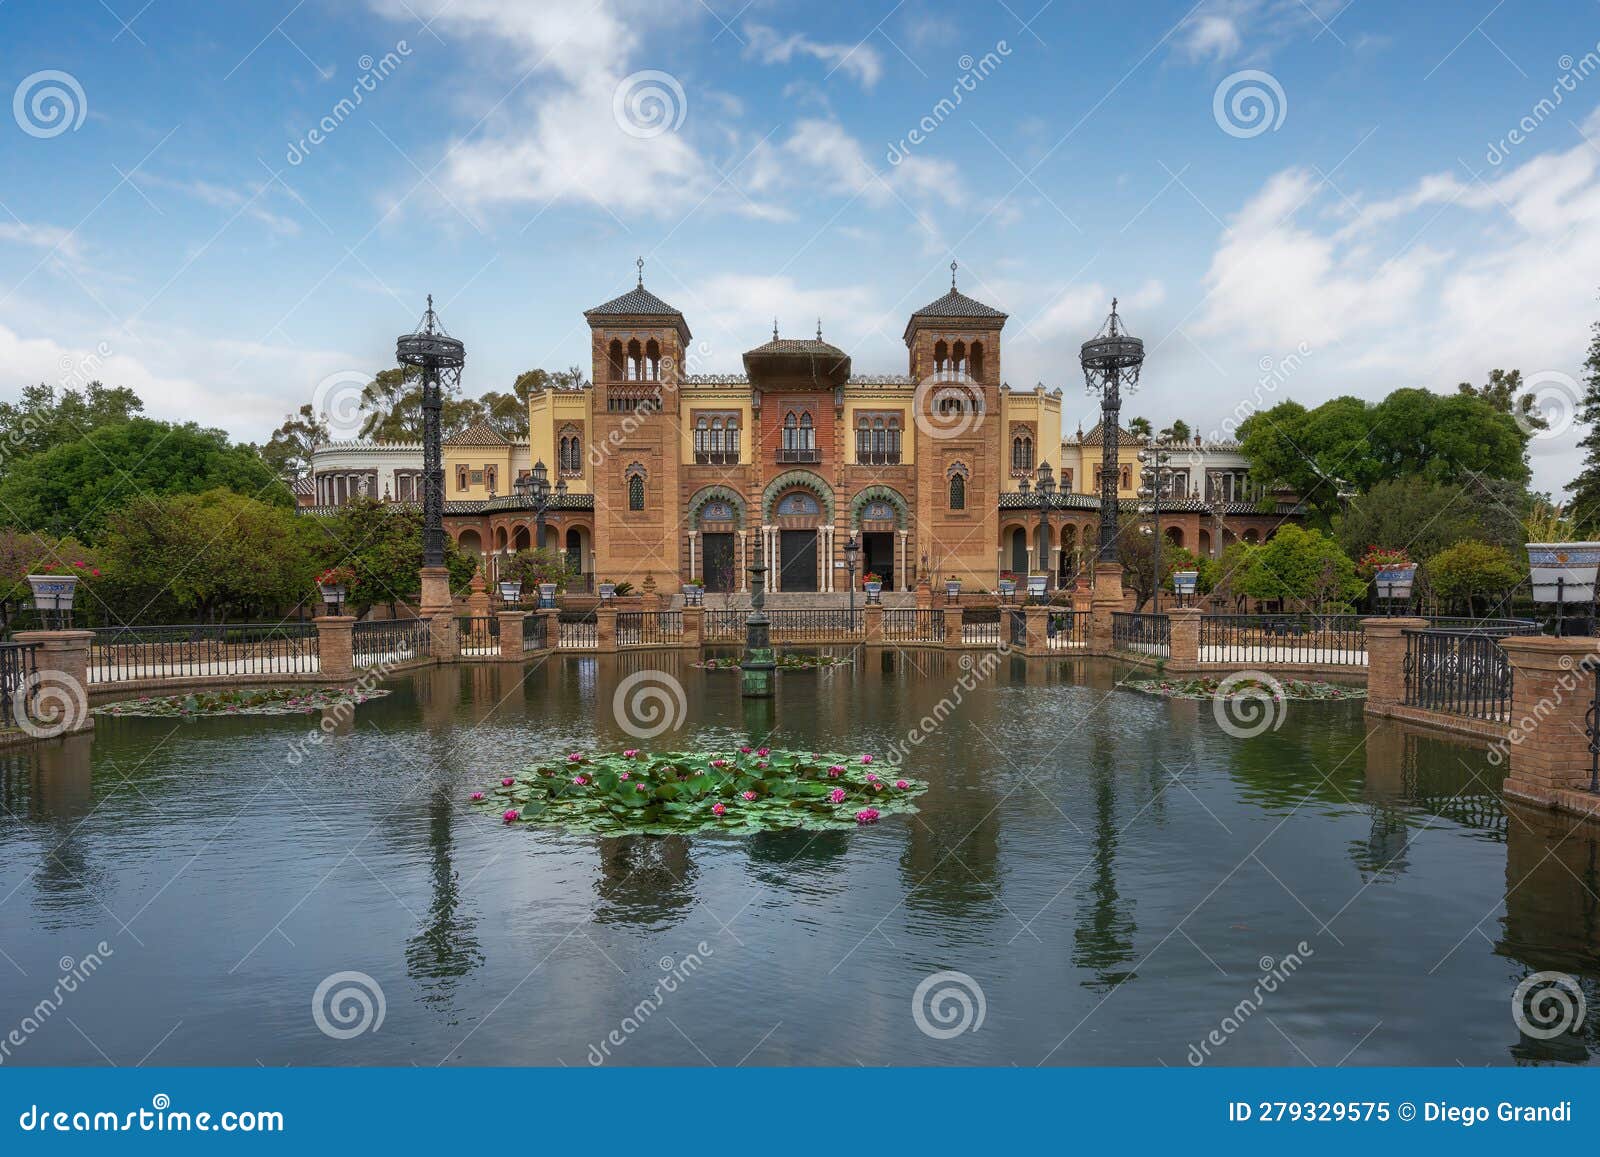 plaza de america central pond and mudejar pavilion at maria luisa park - seville, andalusia, spain